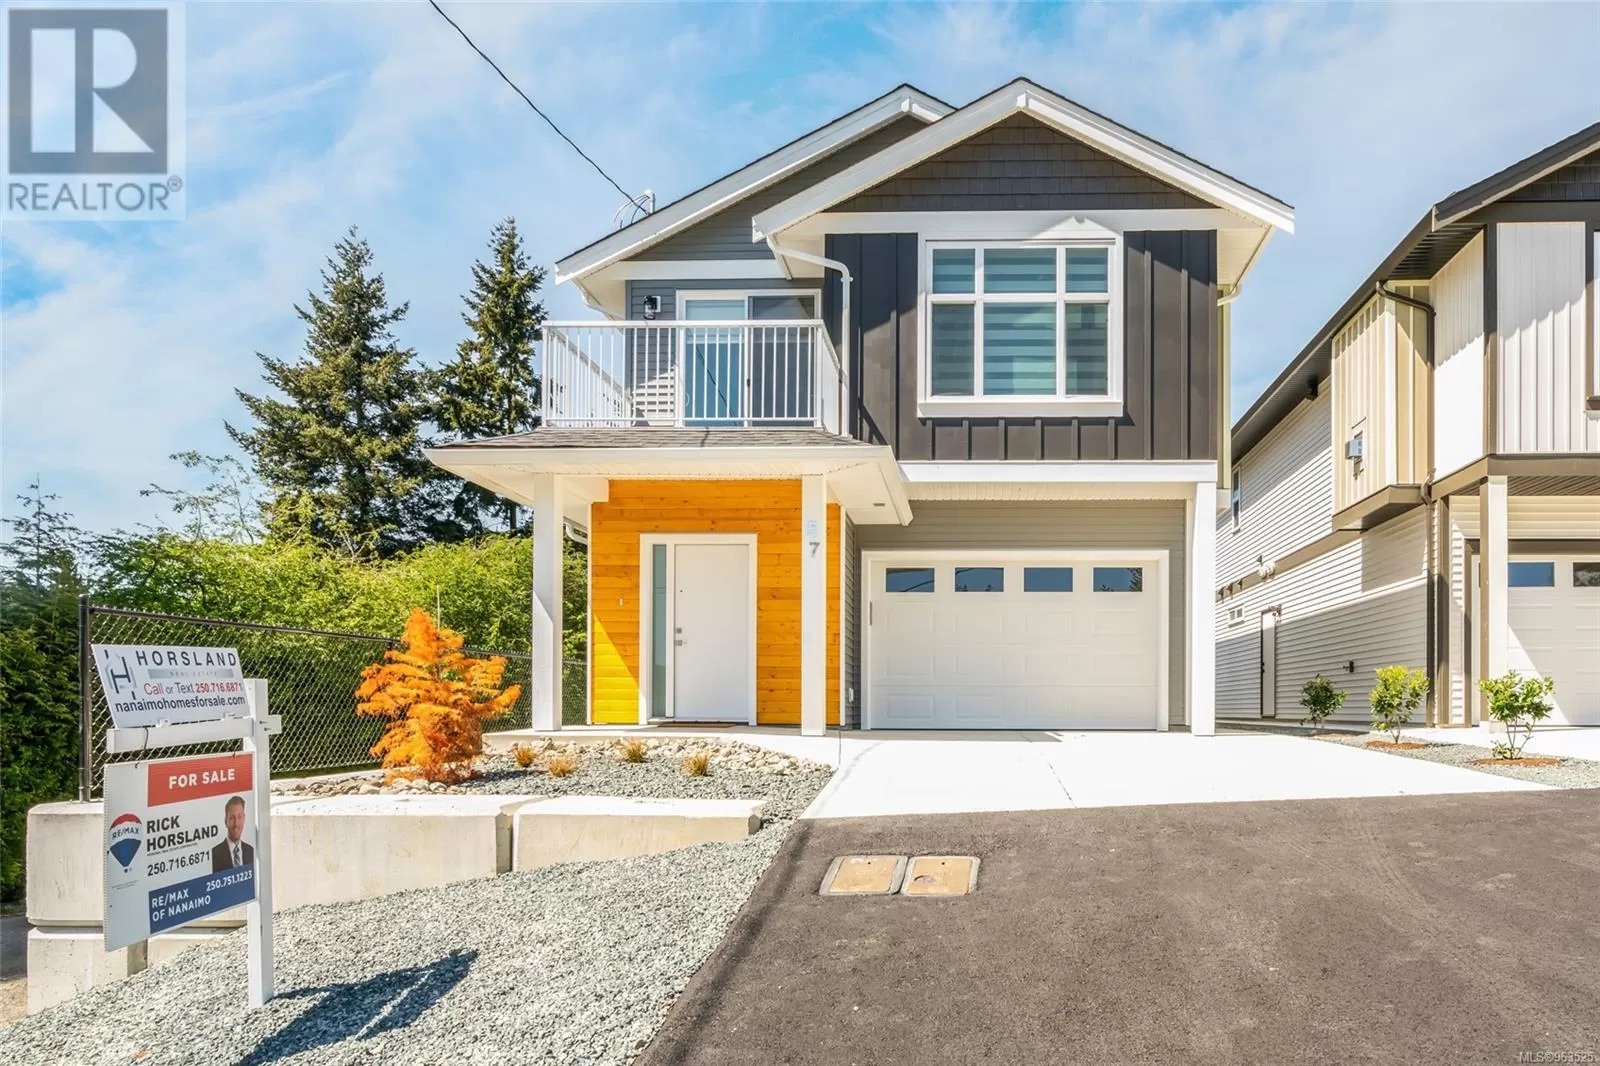 House for rent: 57 Acacia Ave, Nanaimo, British Columbia V9R 3L3